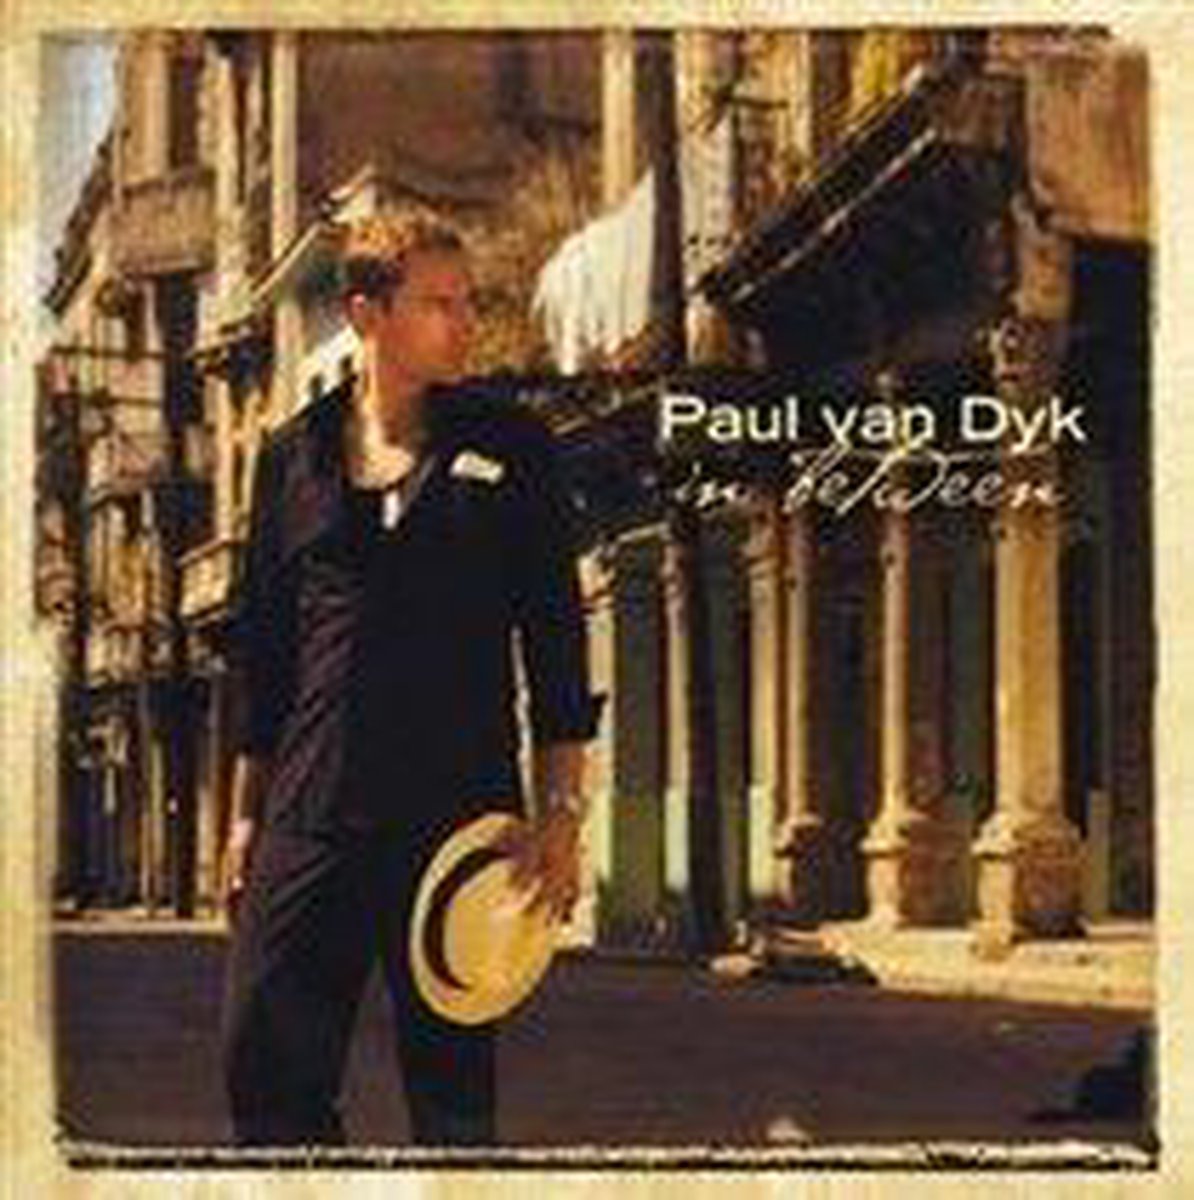 In Between - Paul van Dyk